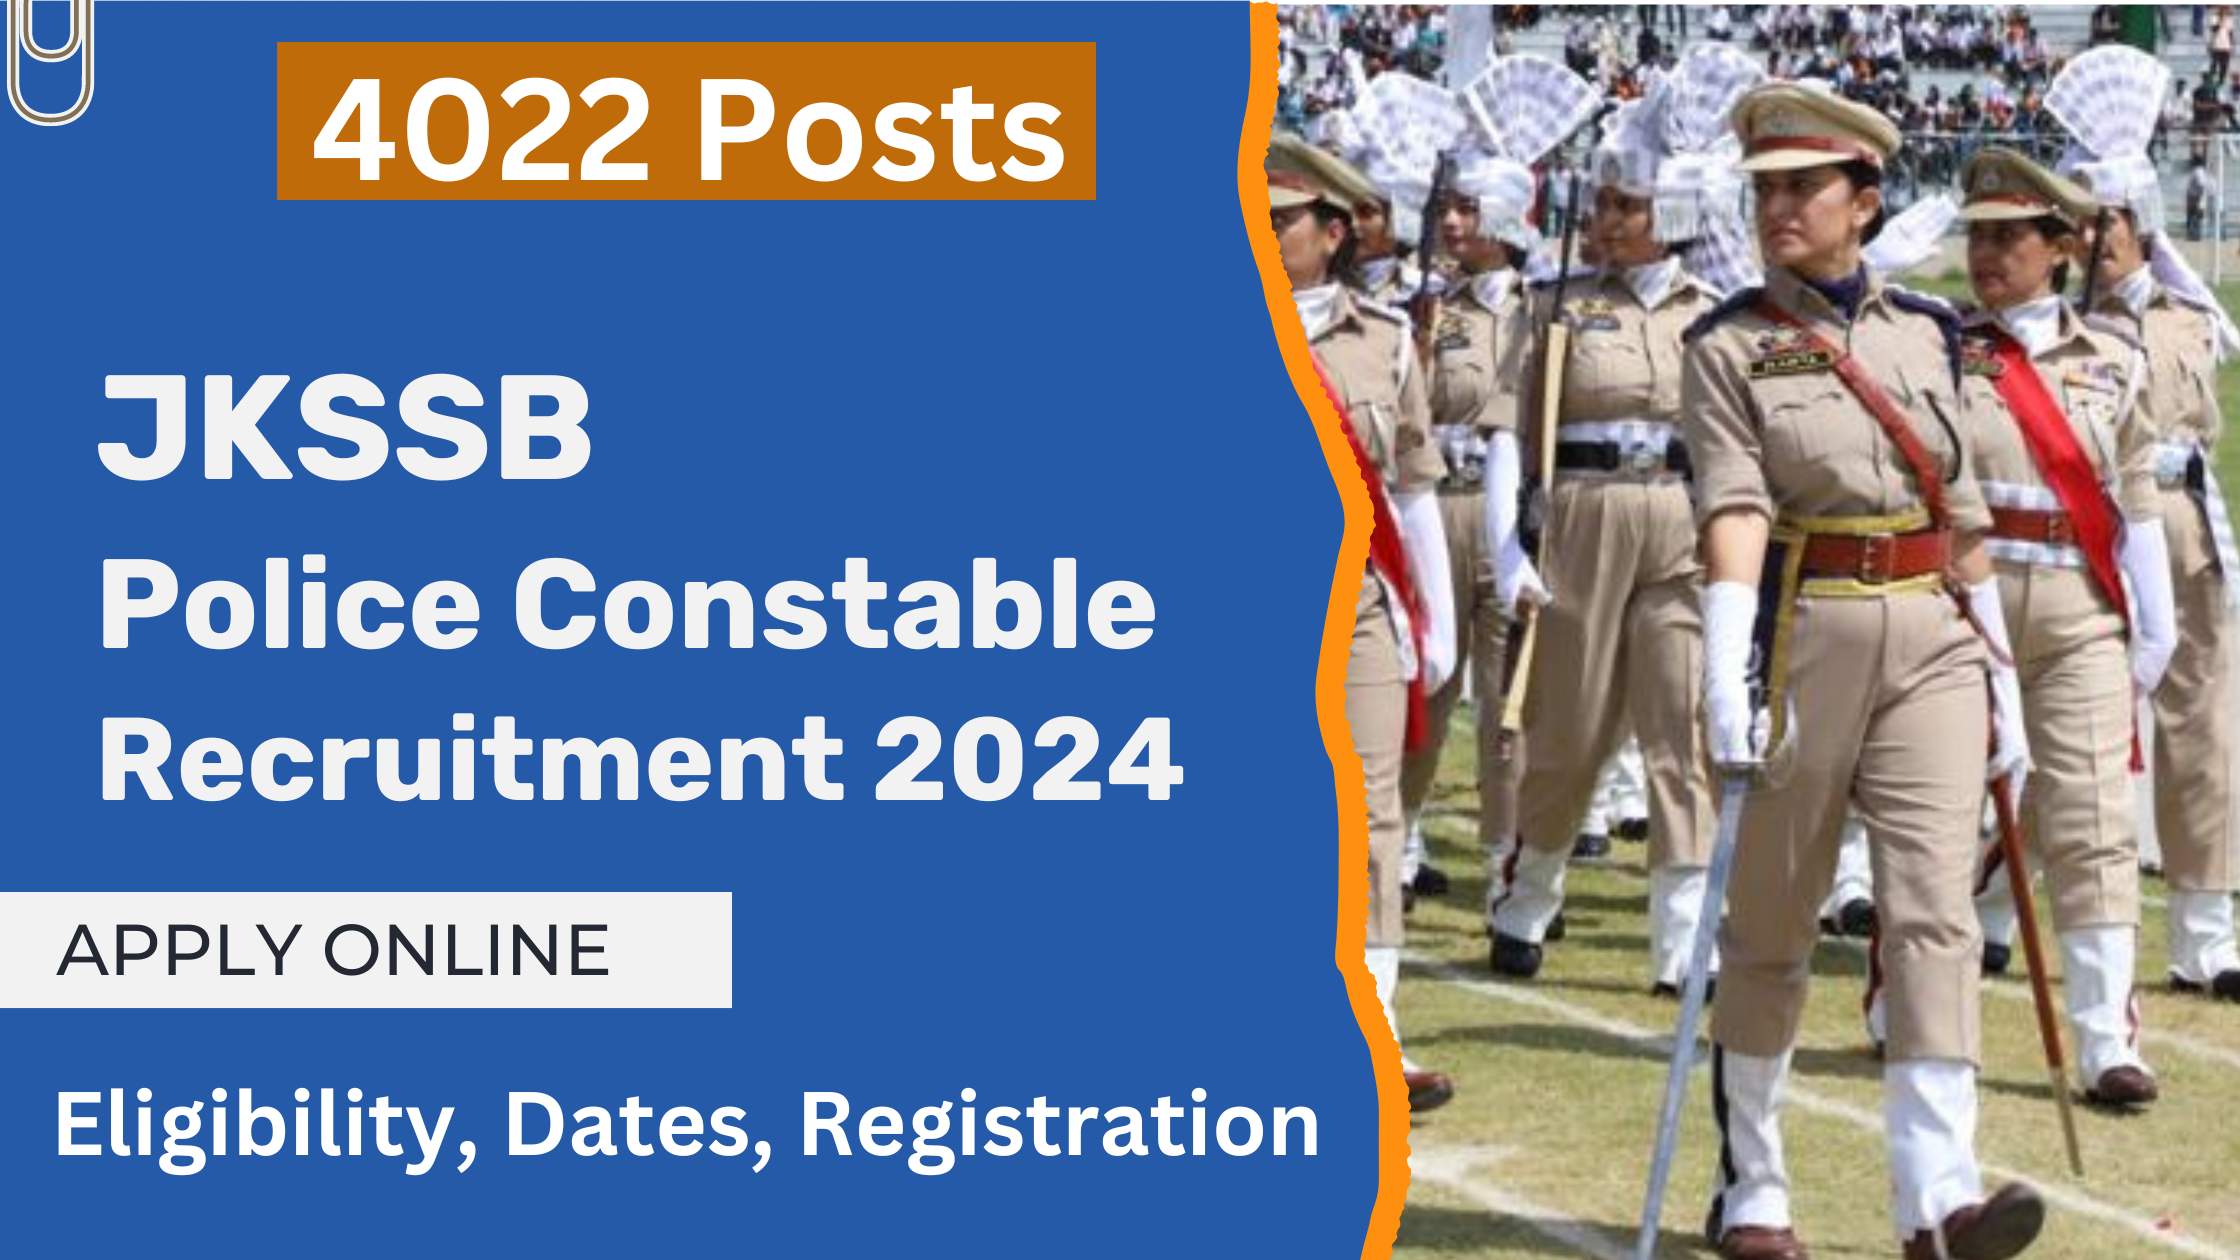 JKSSB Police Constable Recruitment 2024